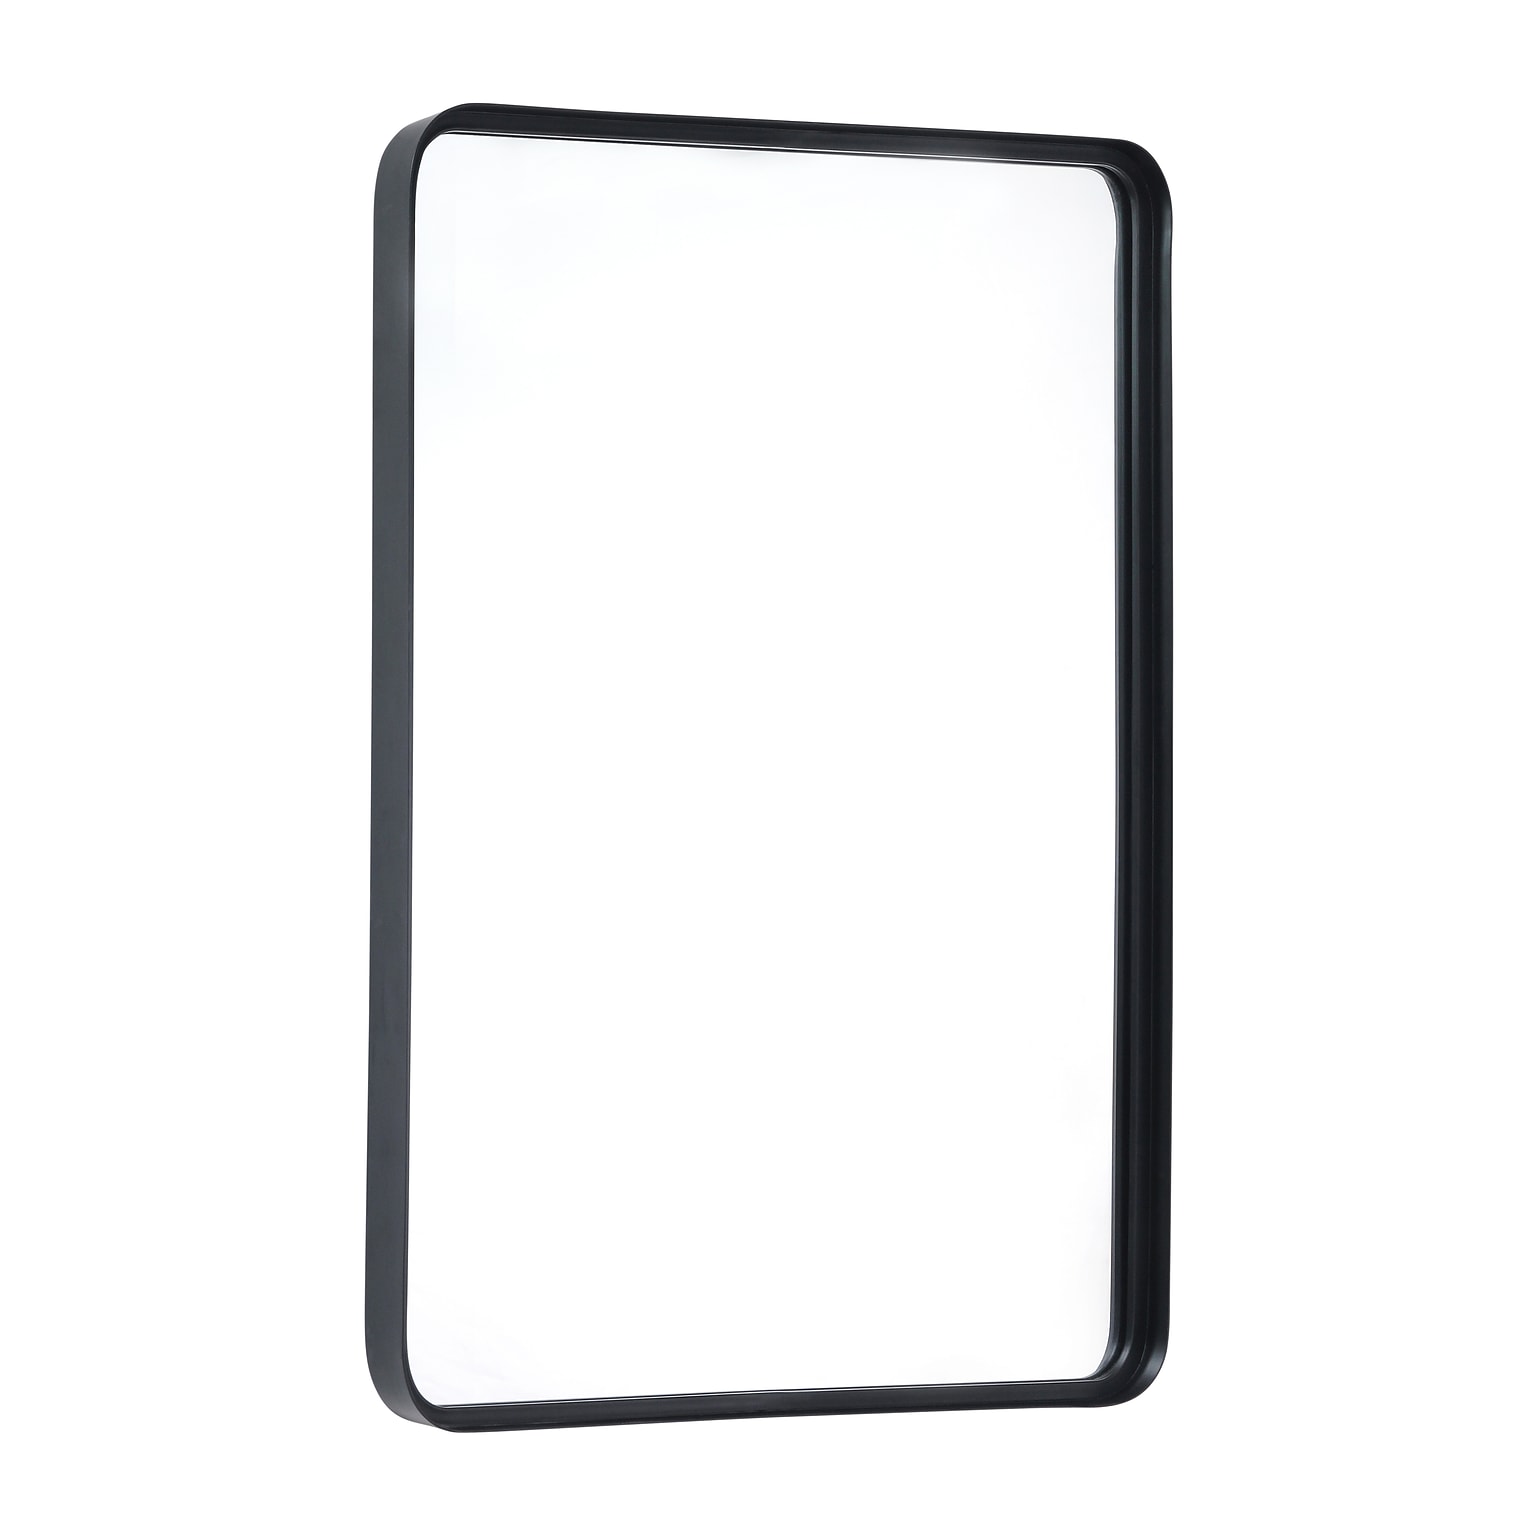 Flash Furniture Ava Deep Framed Wall Mirror, 24x 36 Black (HMHD22M111YABLK)